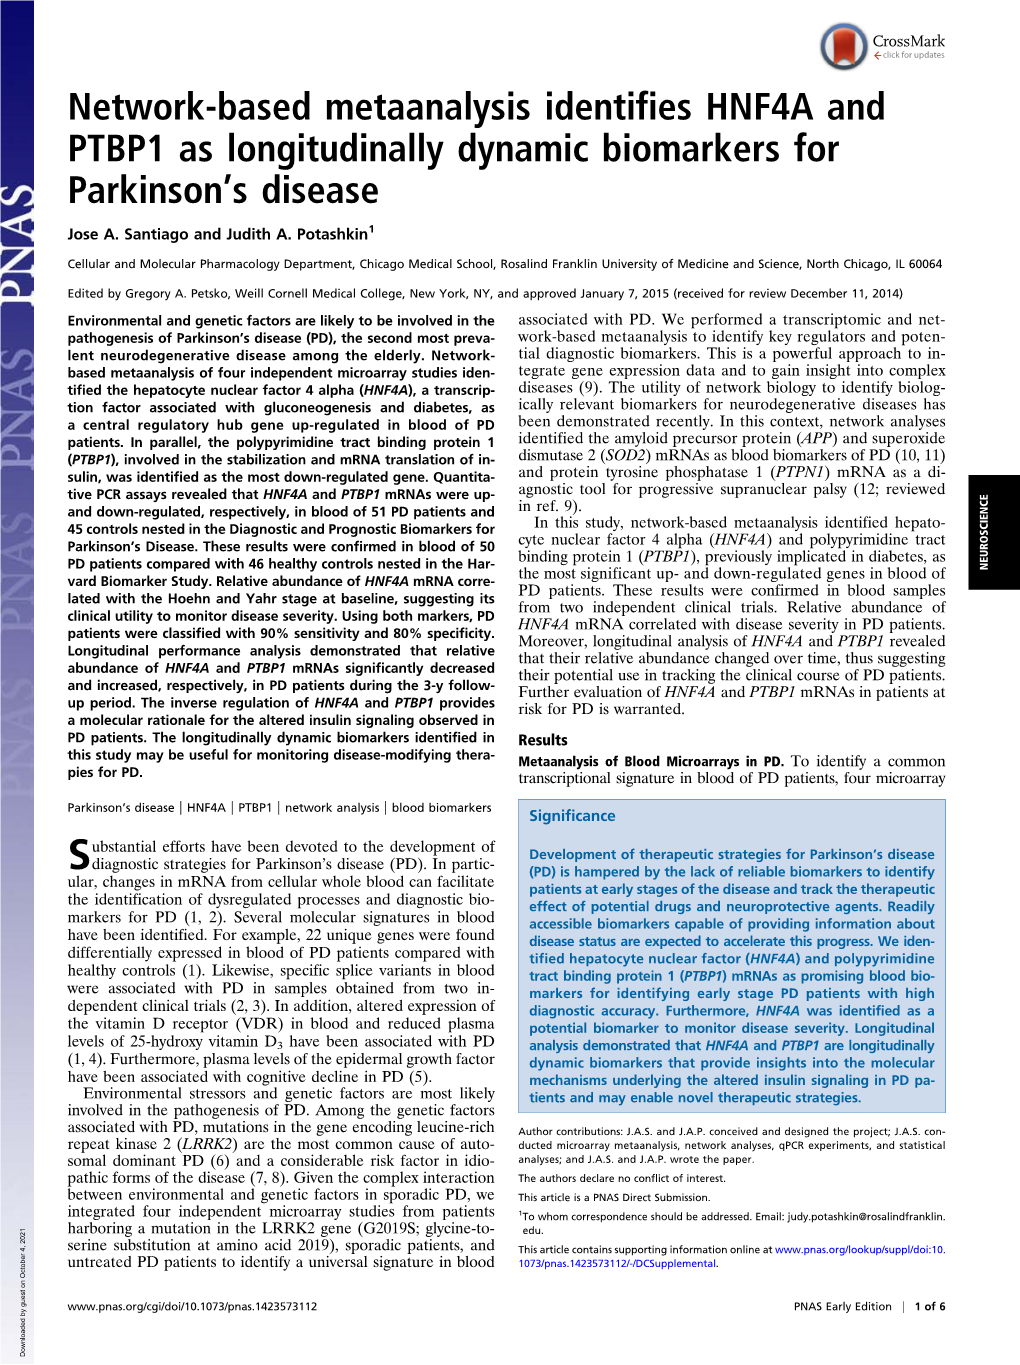 Network-Based Metaanalysis Identifies HNF4A and PTBP1 As Longitudinally Dynamic Biomarkers for Parkinson’S Disease